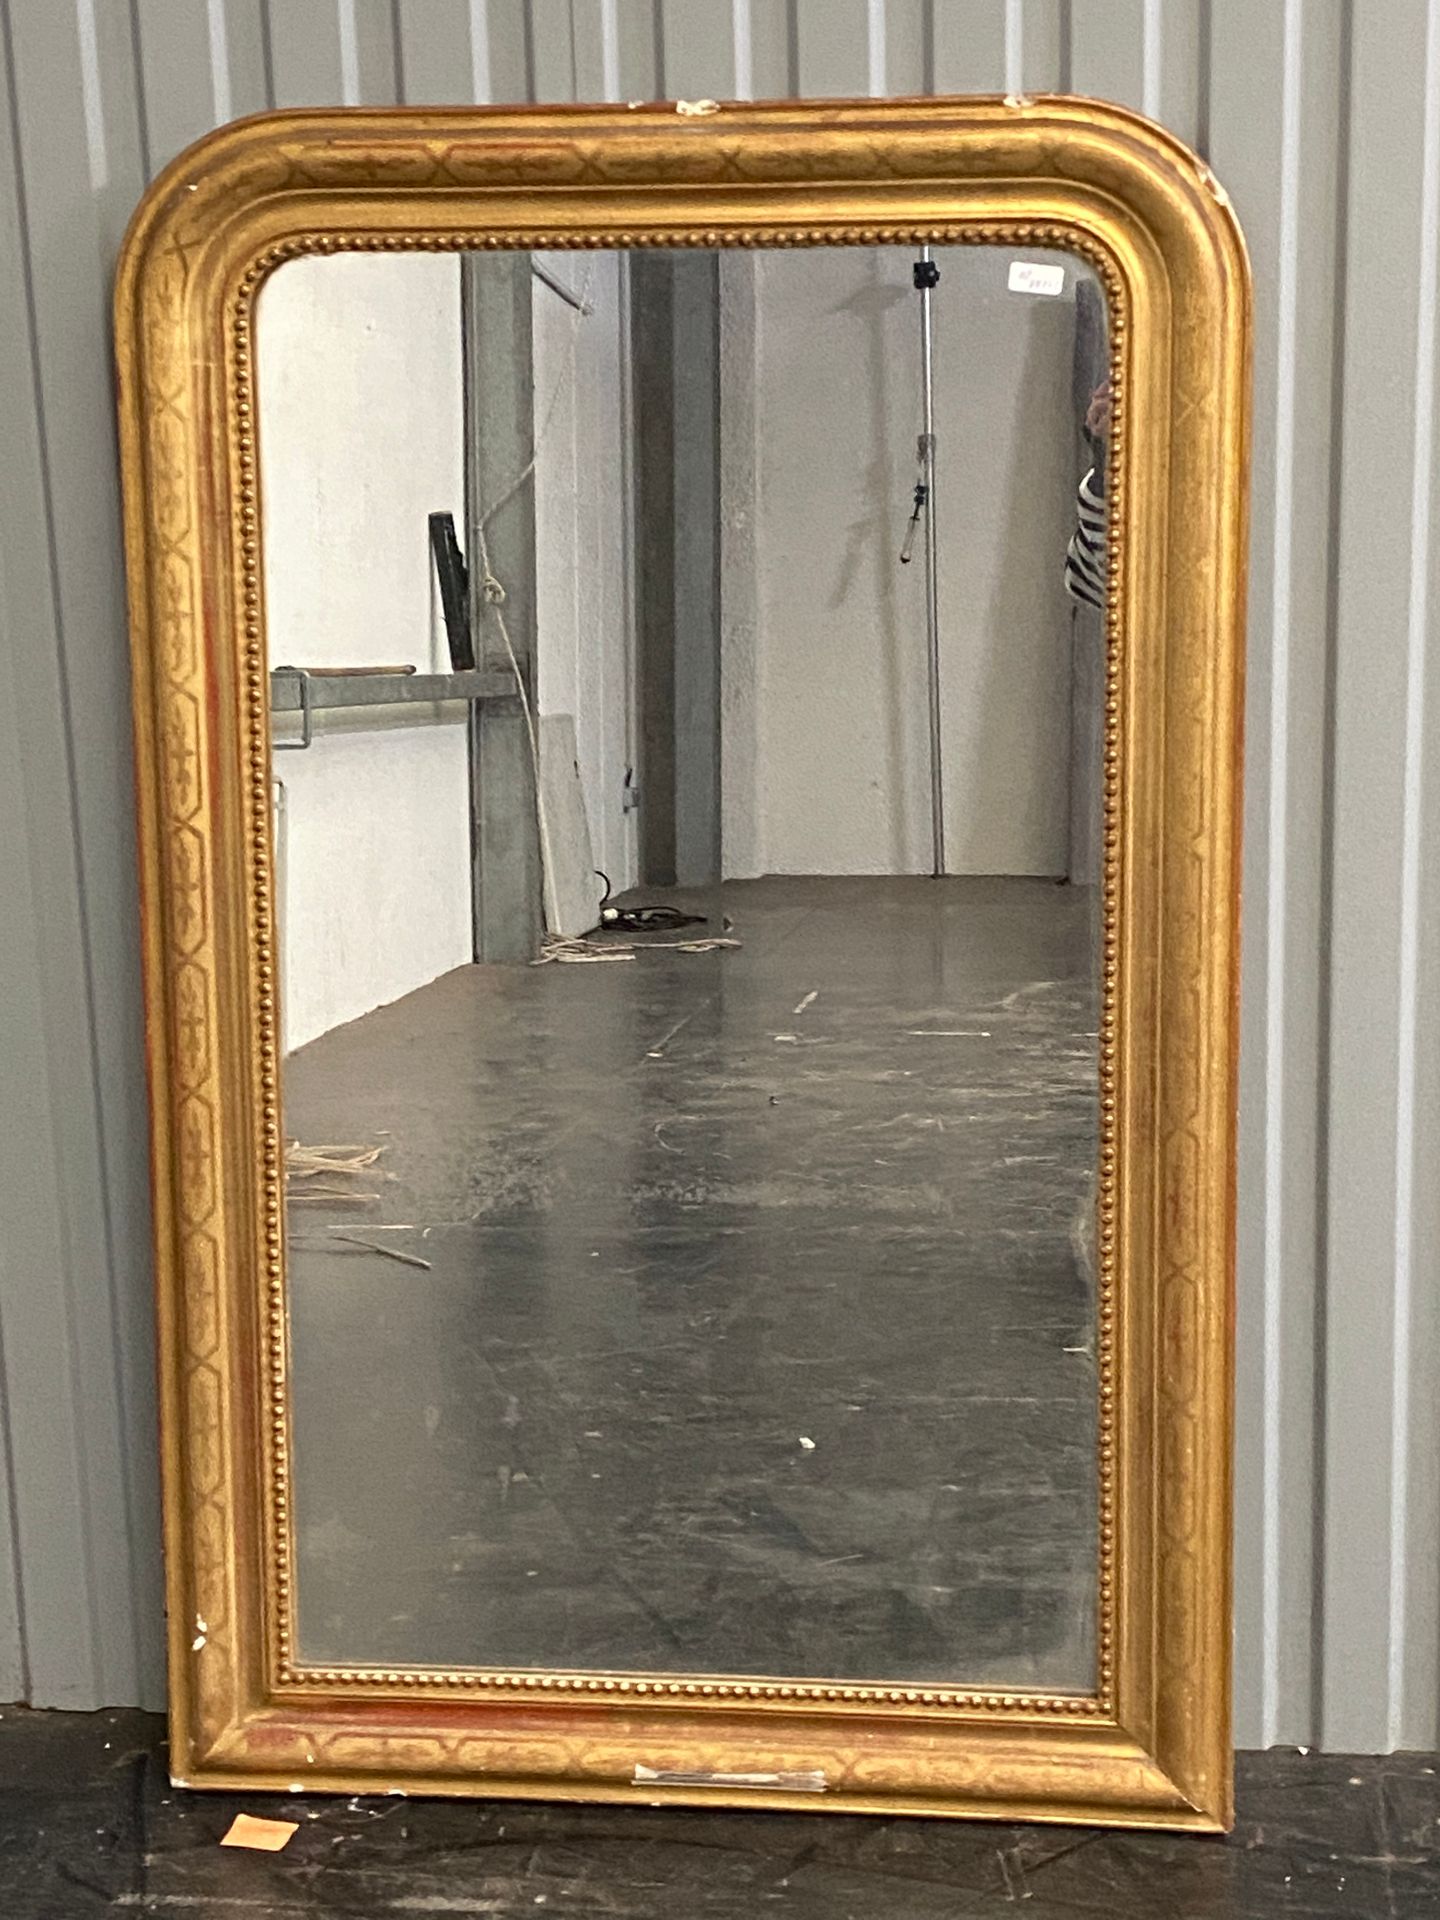 Null Gilt framed mantelpiece mirror.

Louis Philippe period

134 x 85 cm